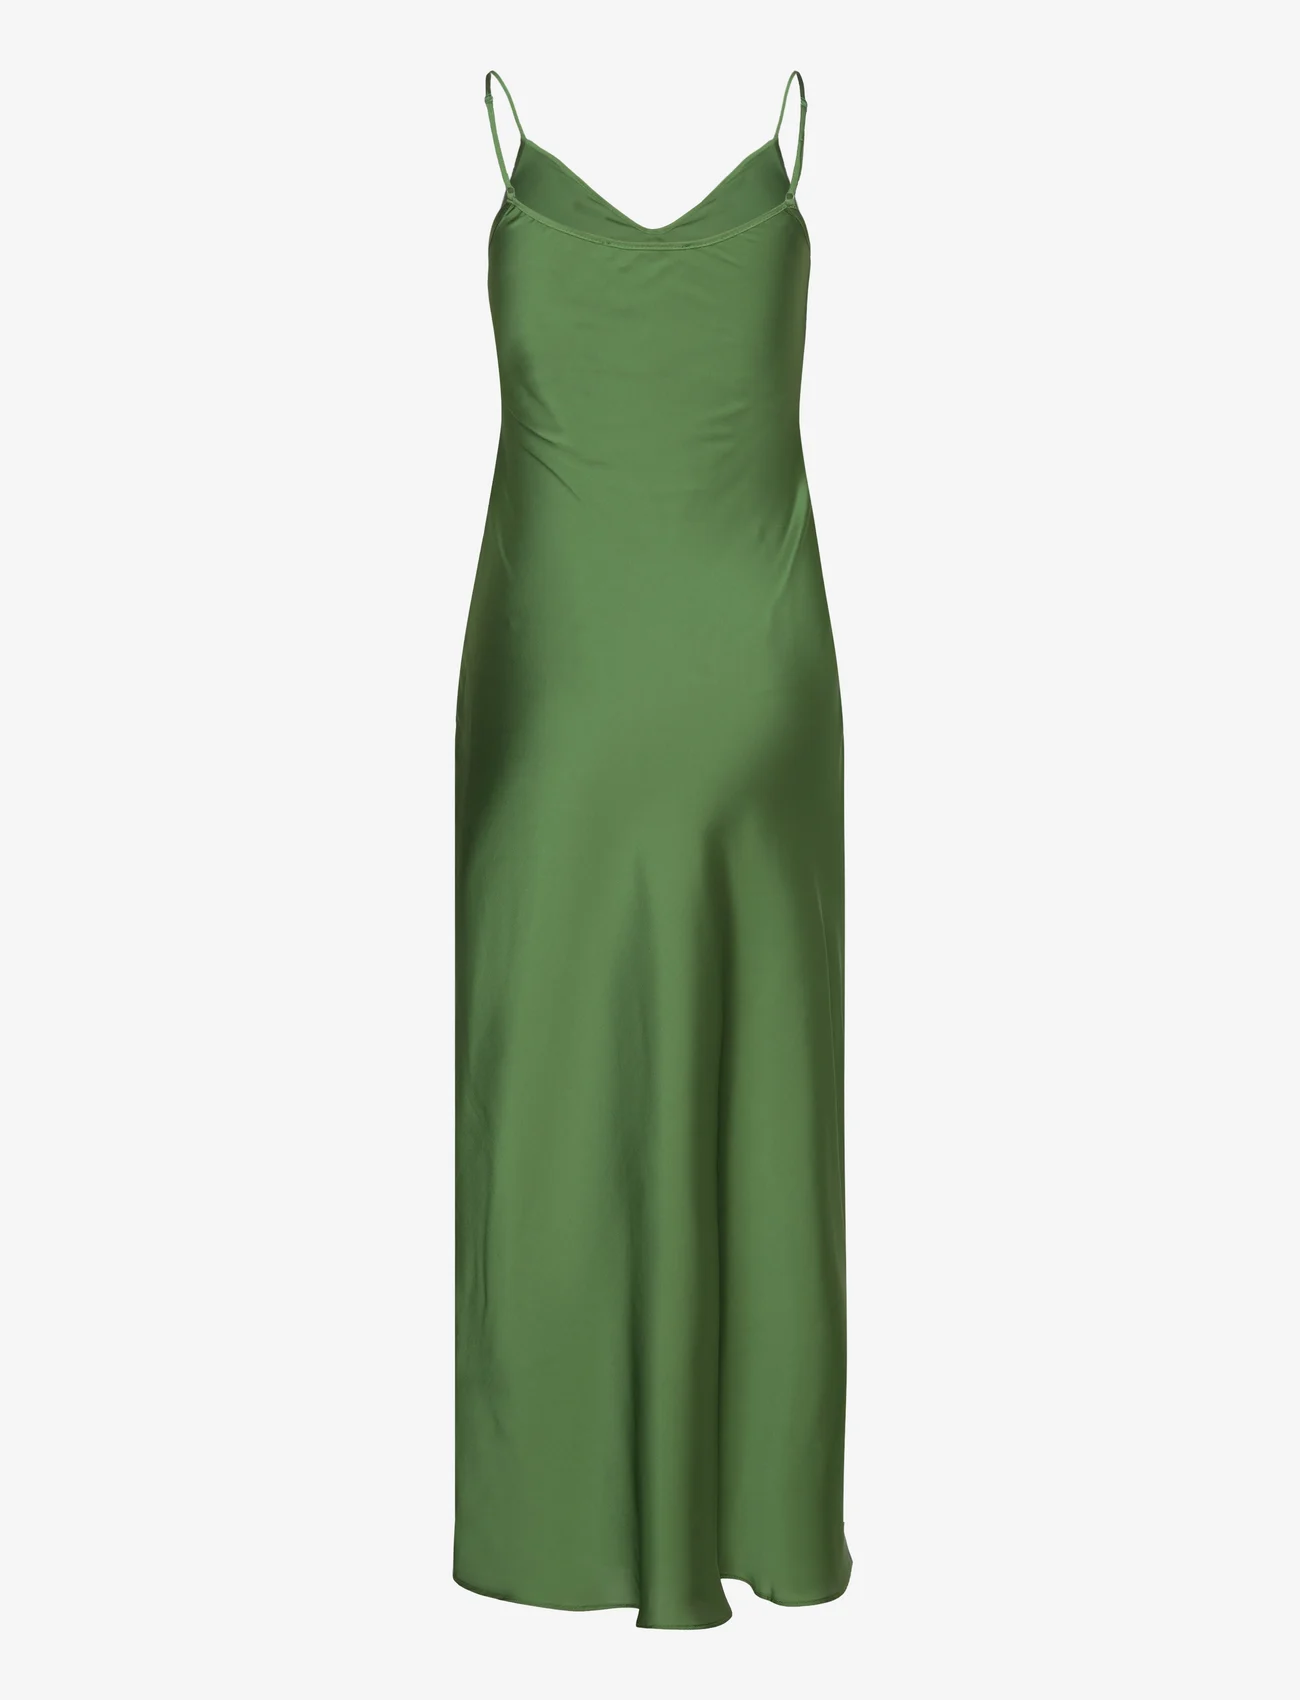 AllSaints - BRYONY DRESS - midi kjoler - forest green - 1